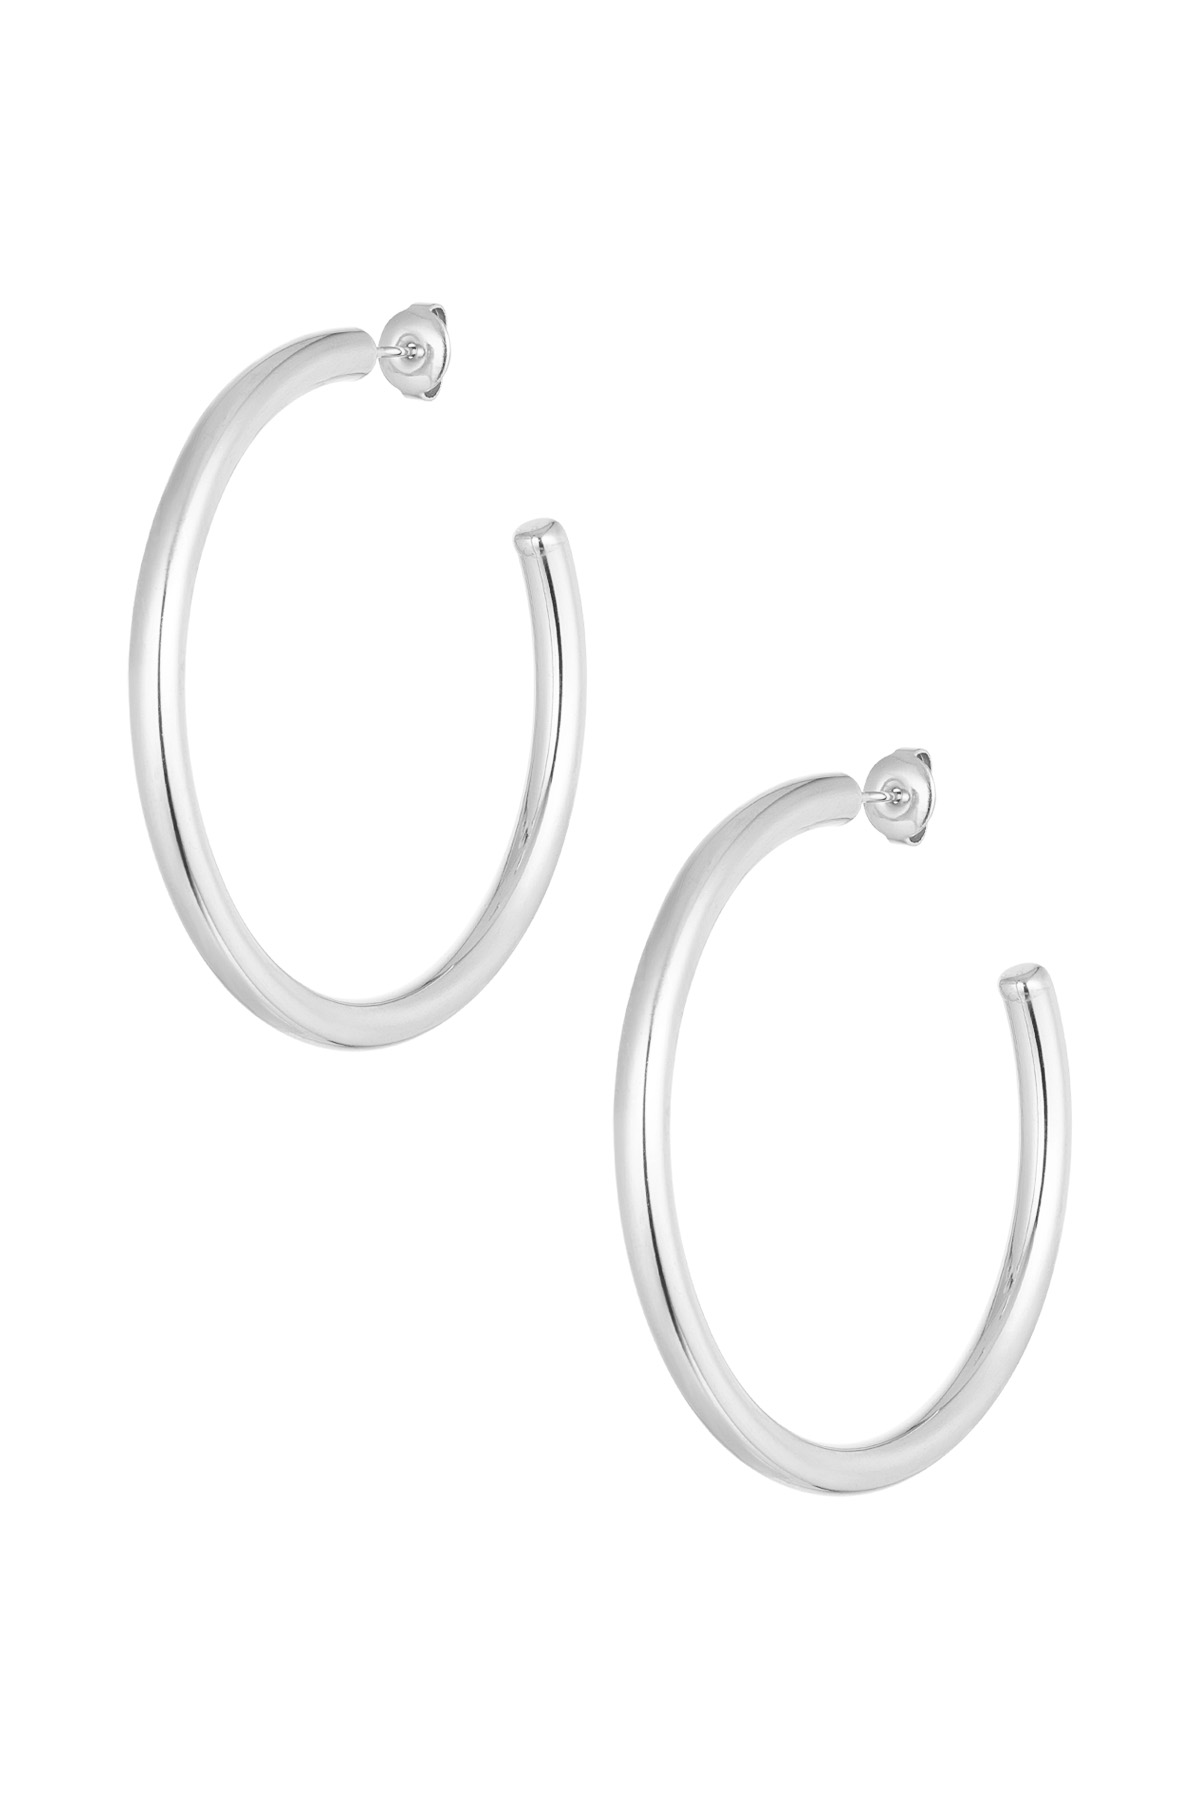 Earrings basic large - silver h5 